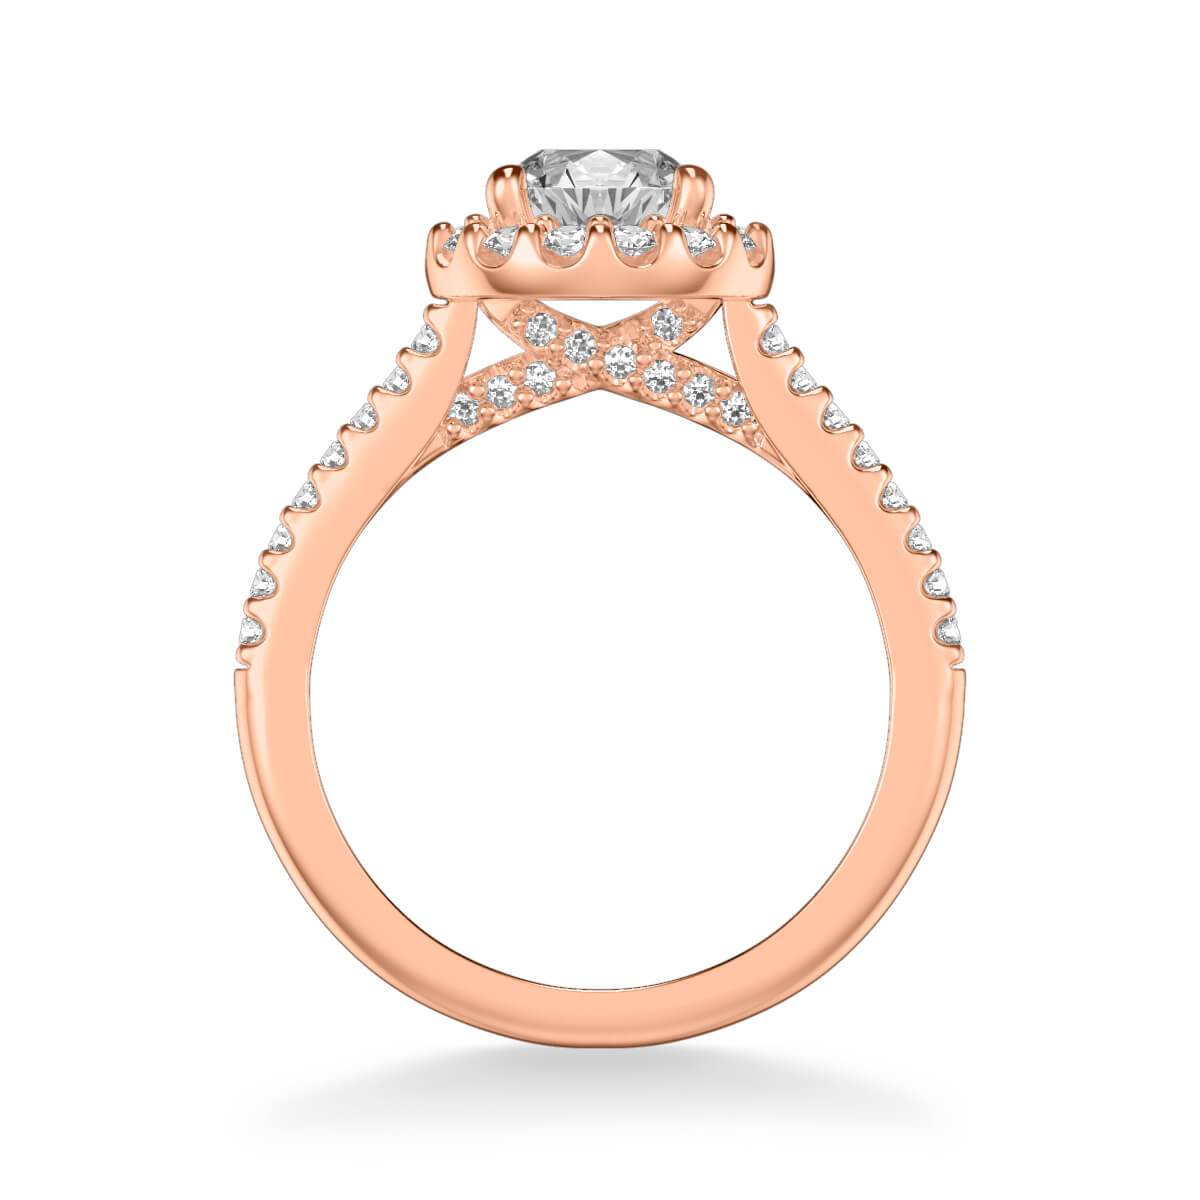 Judith Classic Round Halo Diamond Engagement Ring